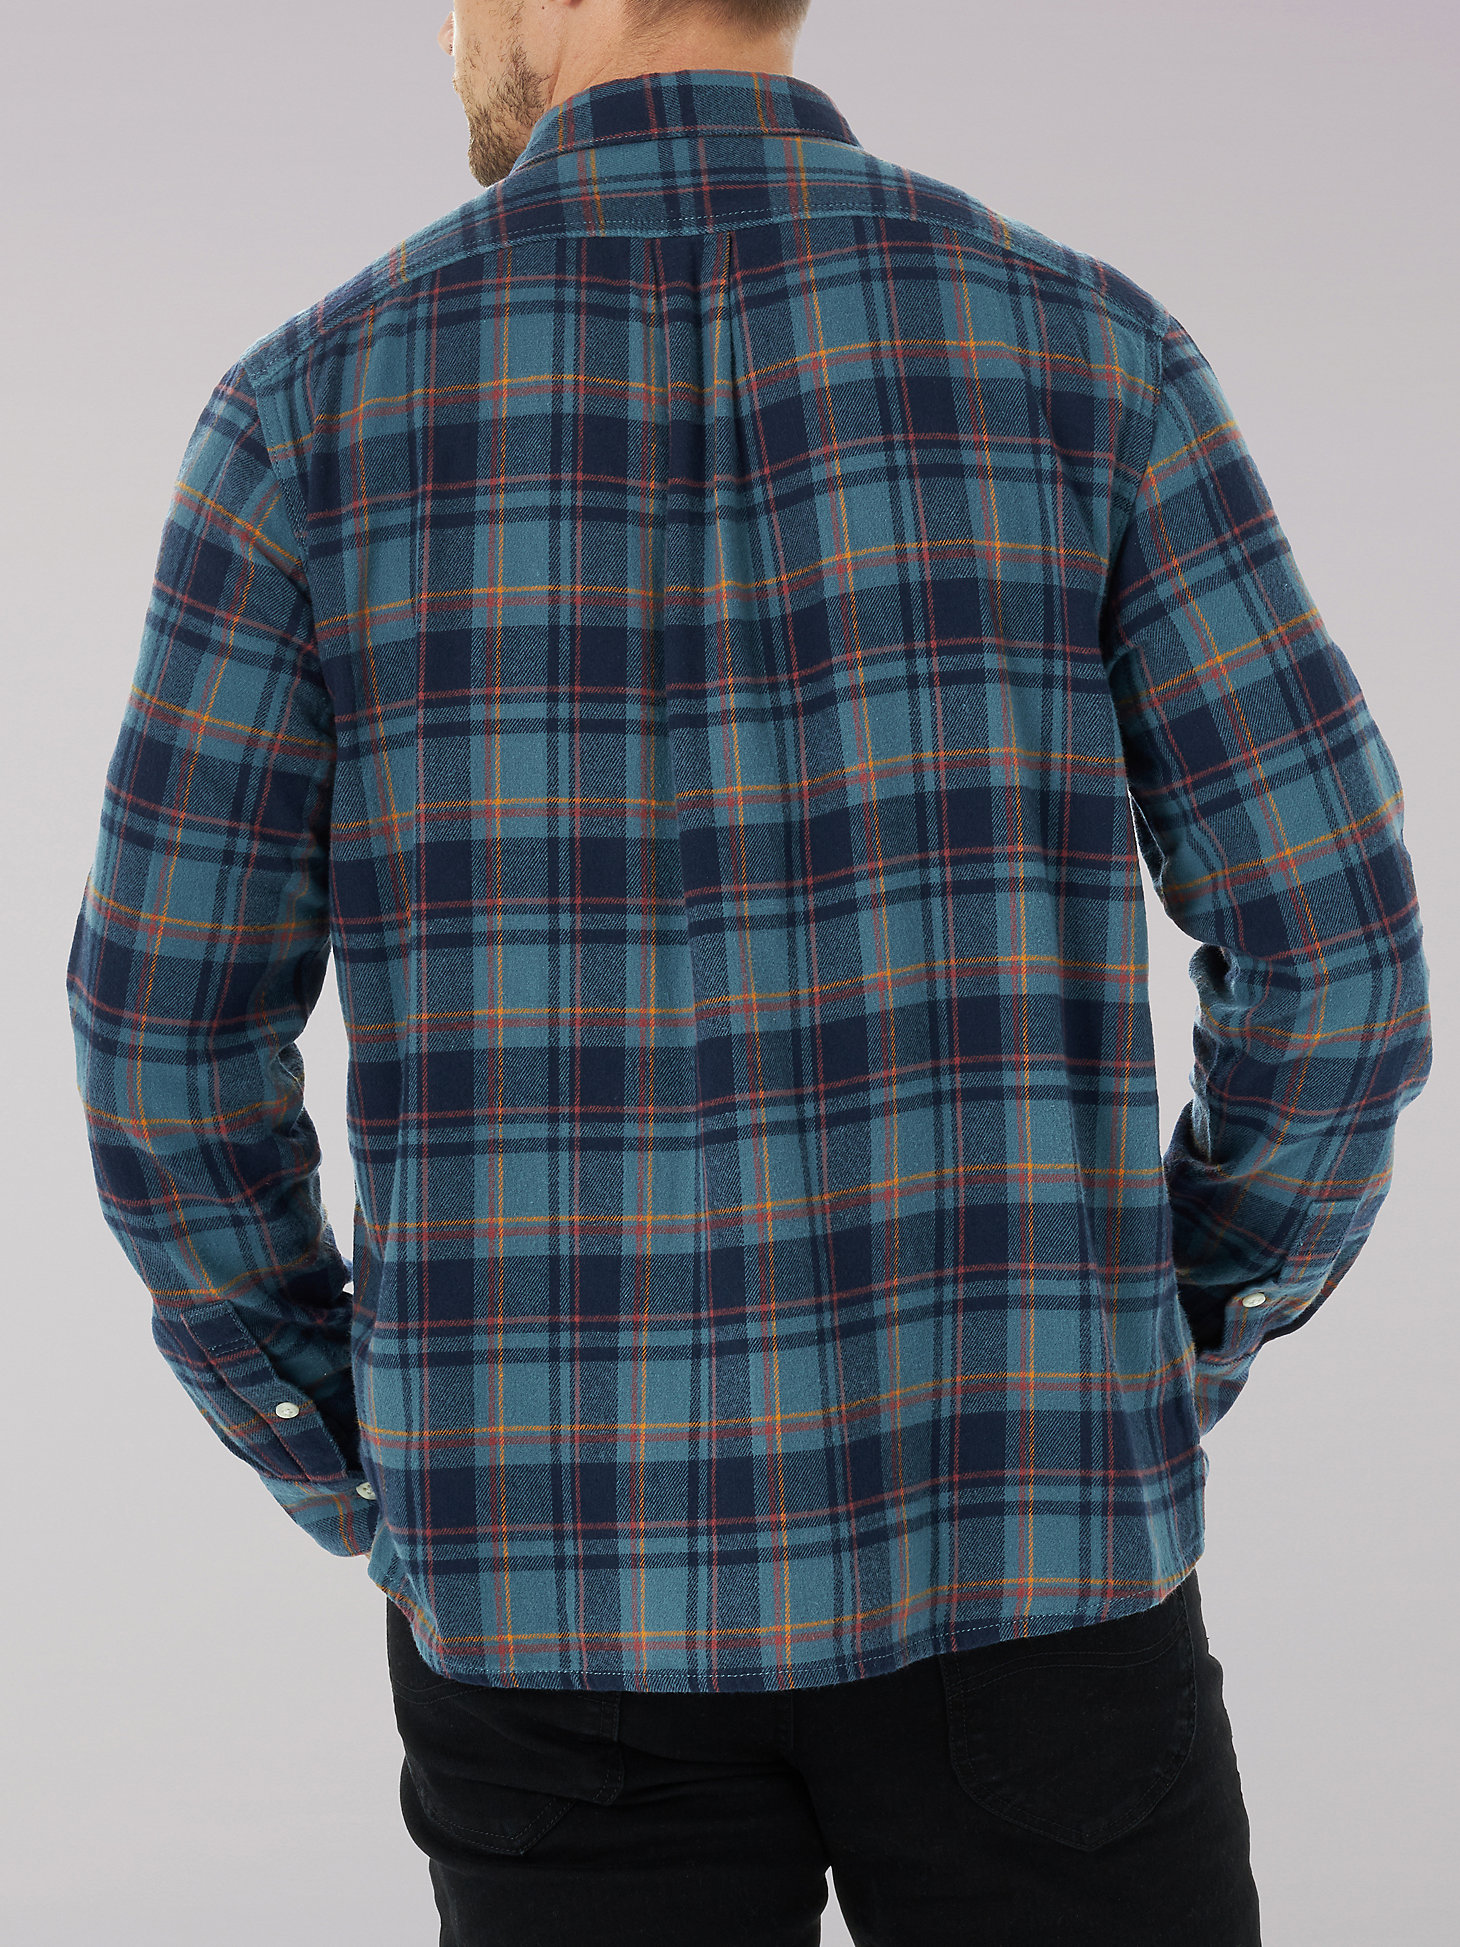 Men's Working West Flannel Plaid Button Down Shirt in Blue Punch alternative view 1